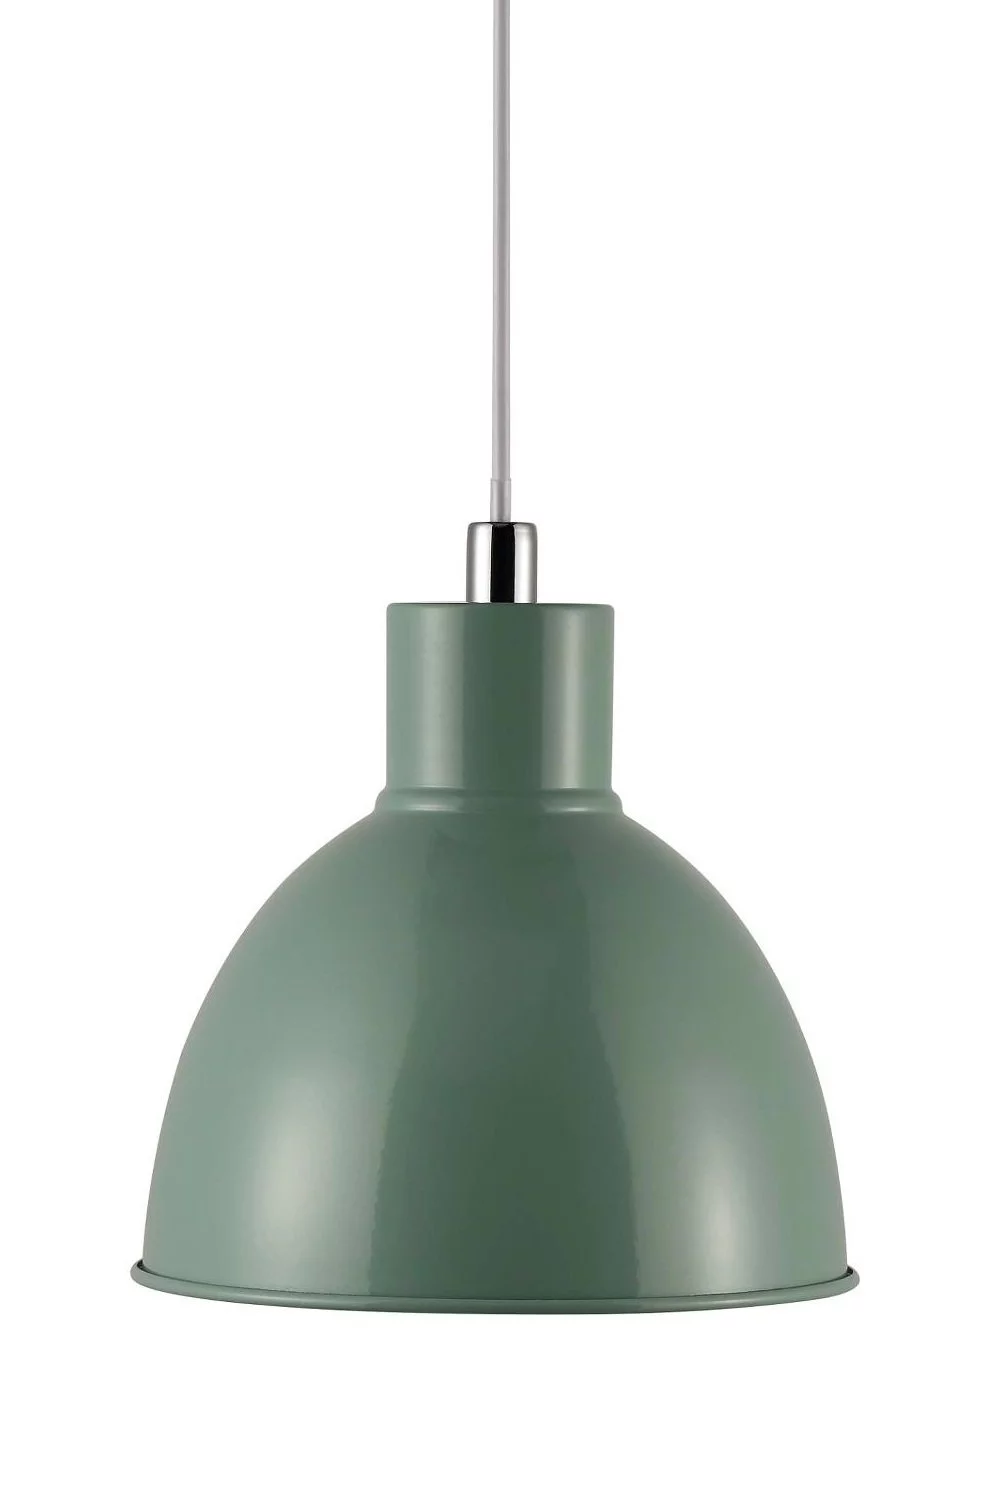   
                        Люстра NORDLUX  (Дания) 20203    
                         в стиле Лофт, Скандинавский.  
                        Тип источника света: светодиодная лампа, сменная.                         Форма: Круг.                         Цвета плафонов и подвесок: Зеленый.                         Материал: Металл.                          фото 1